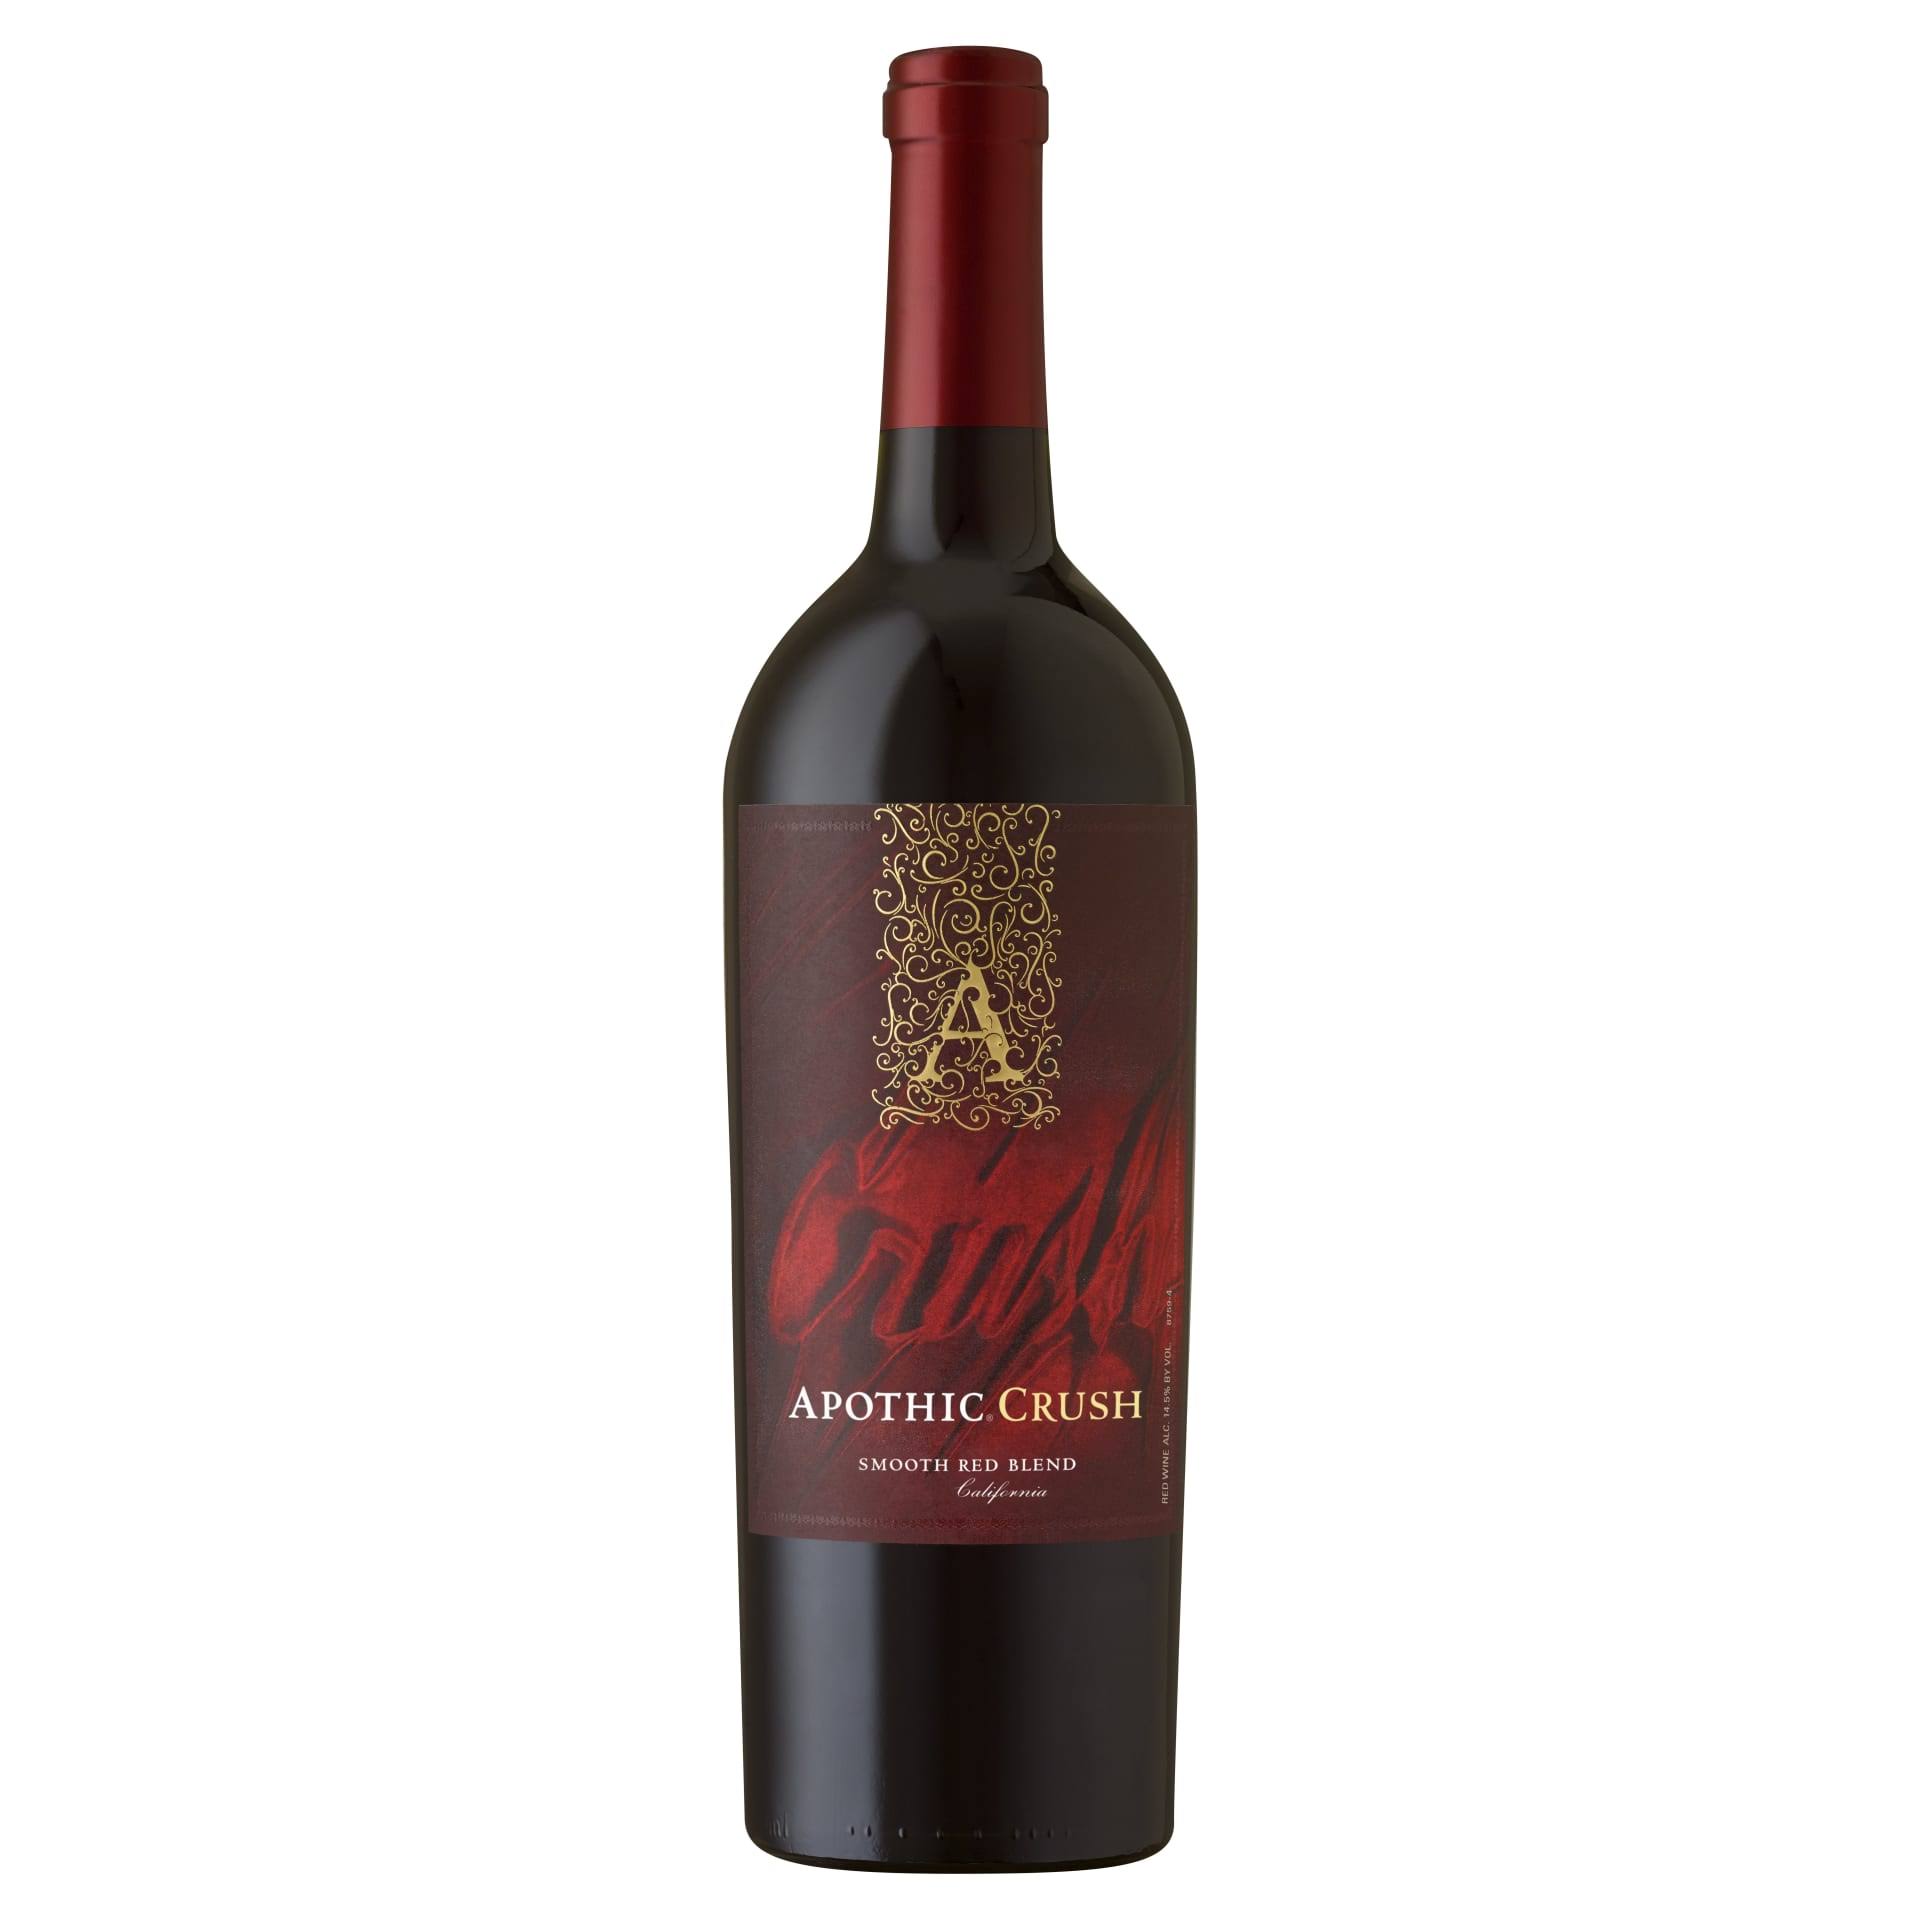 Apothic Crush Smooth Red Blend, California (Vintage Varies) - 750 ml bottle